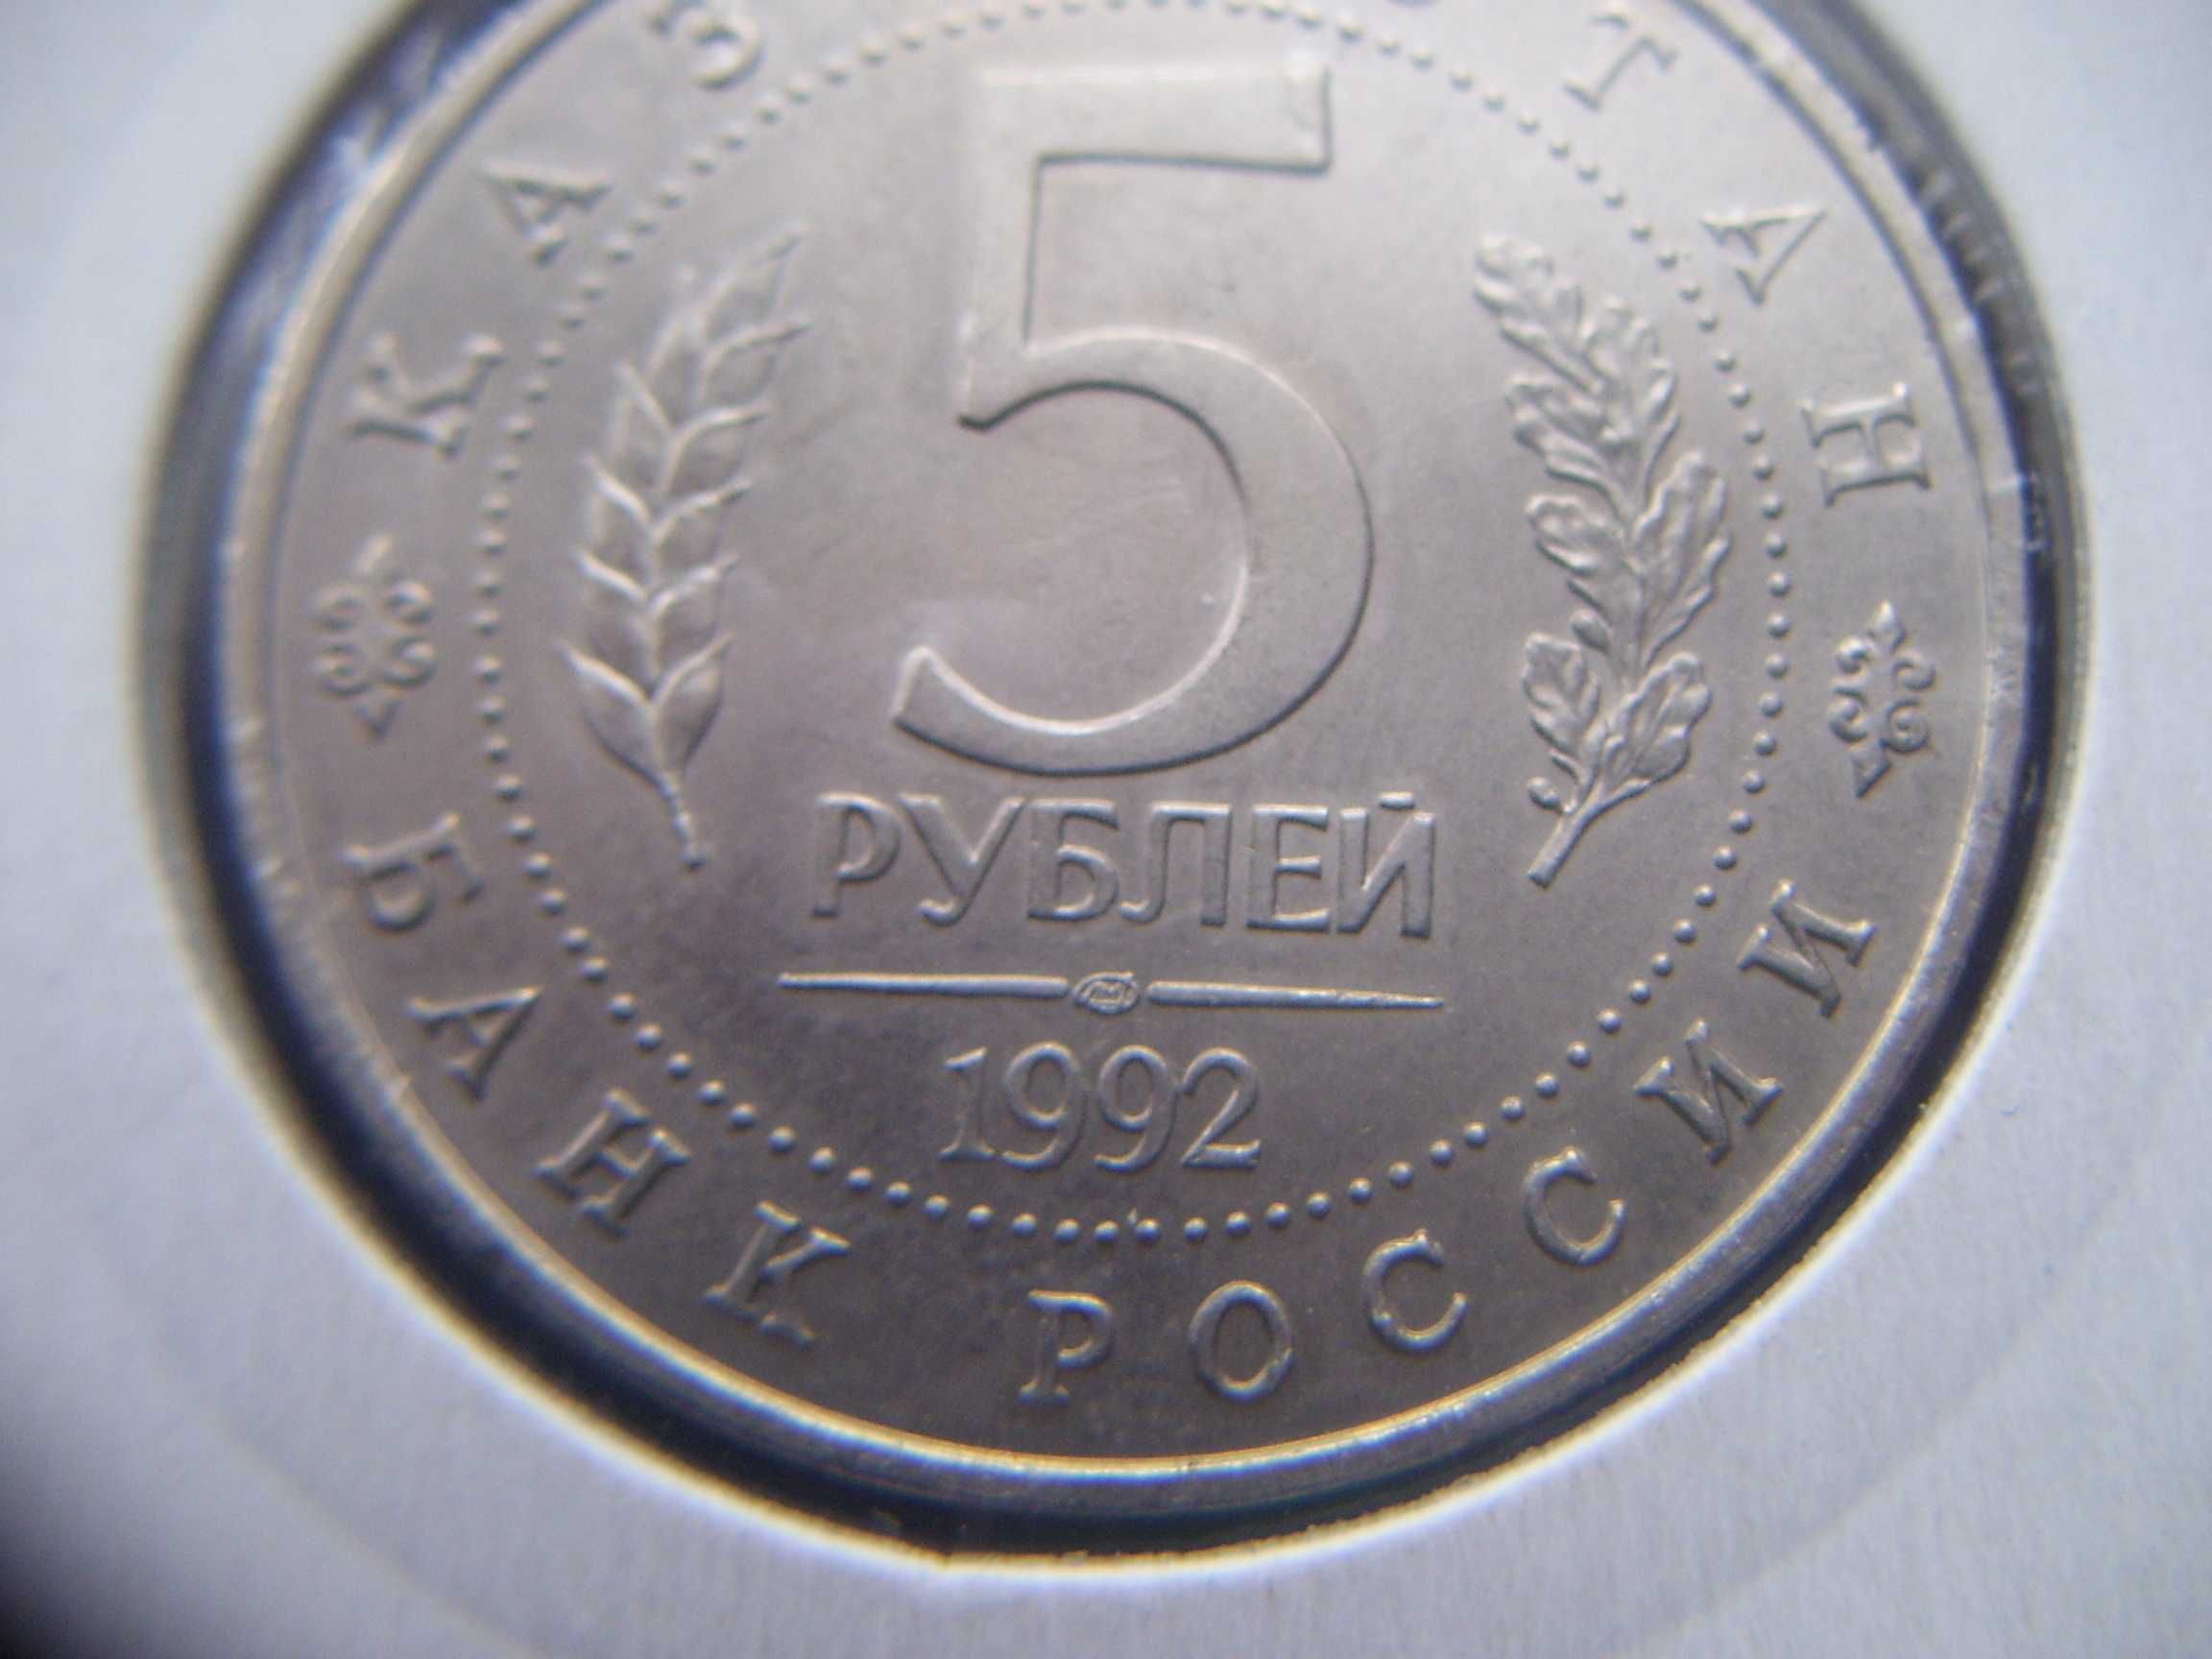 Stare monety 5 rubli 1992 Meczet Rosja